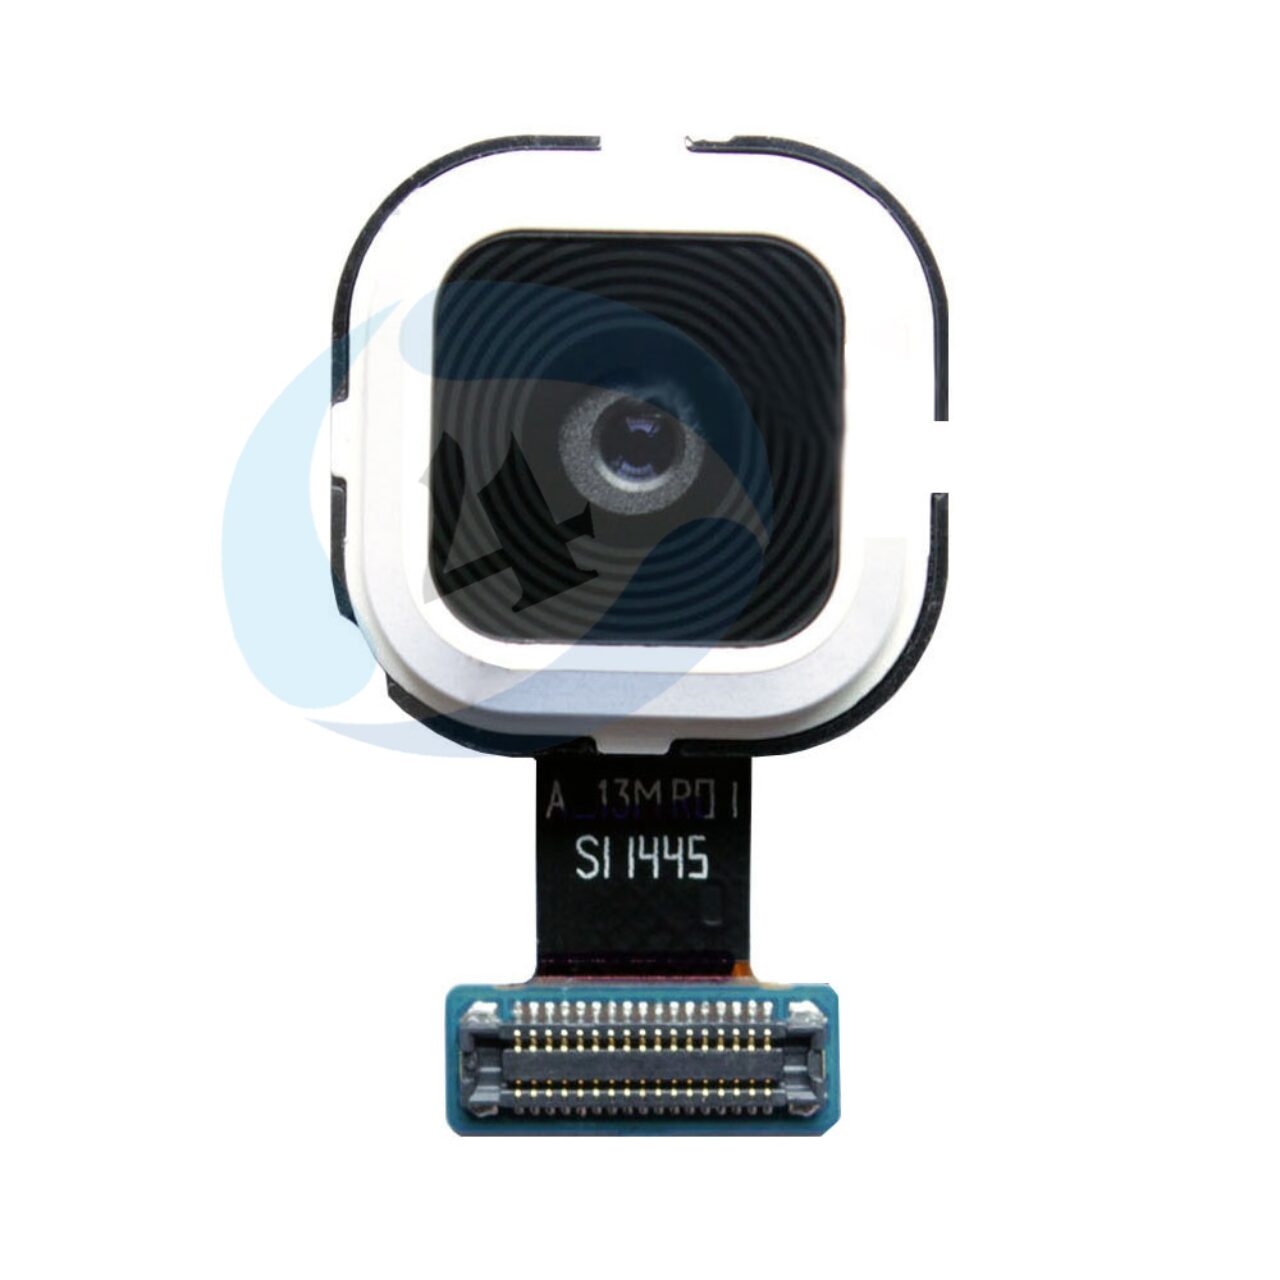 SAMSUNG A700 back camera